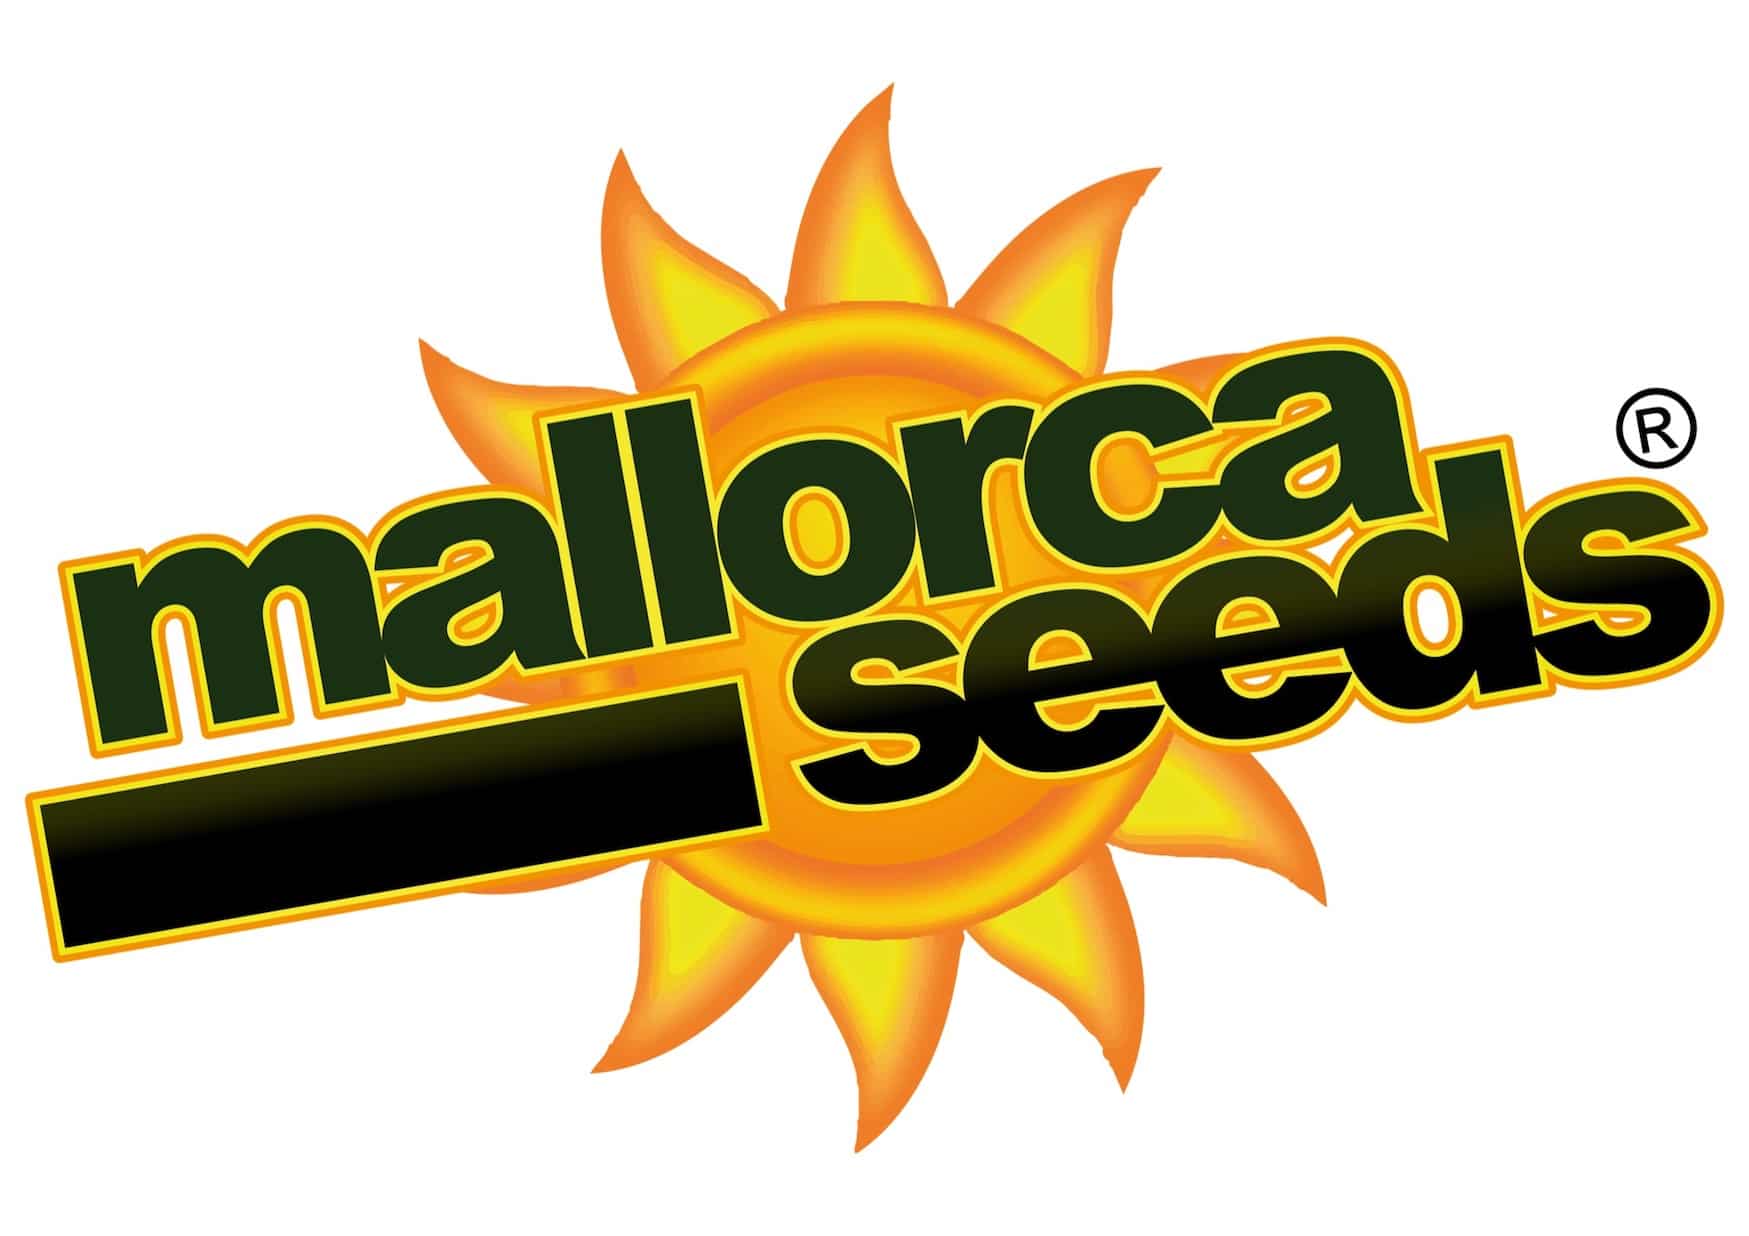 (c) Mallorca-seeds.com